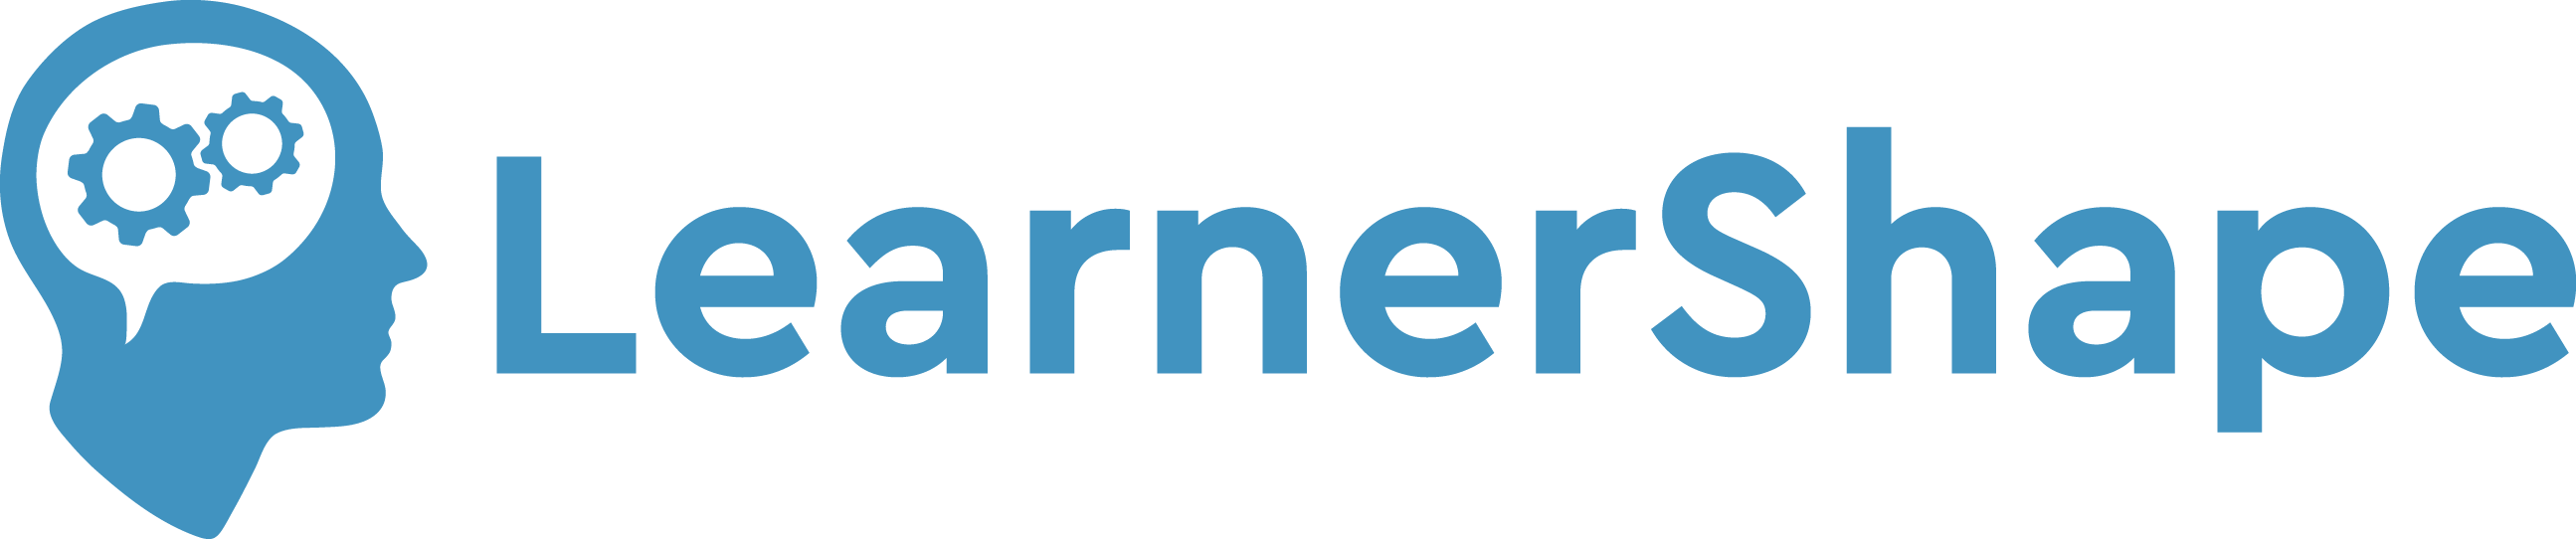 LearnerShape-Horizontal-Color-Logo-1b01ff.png